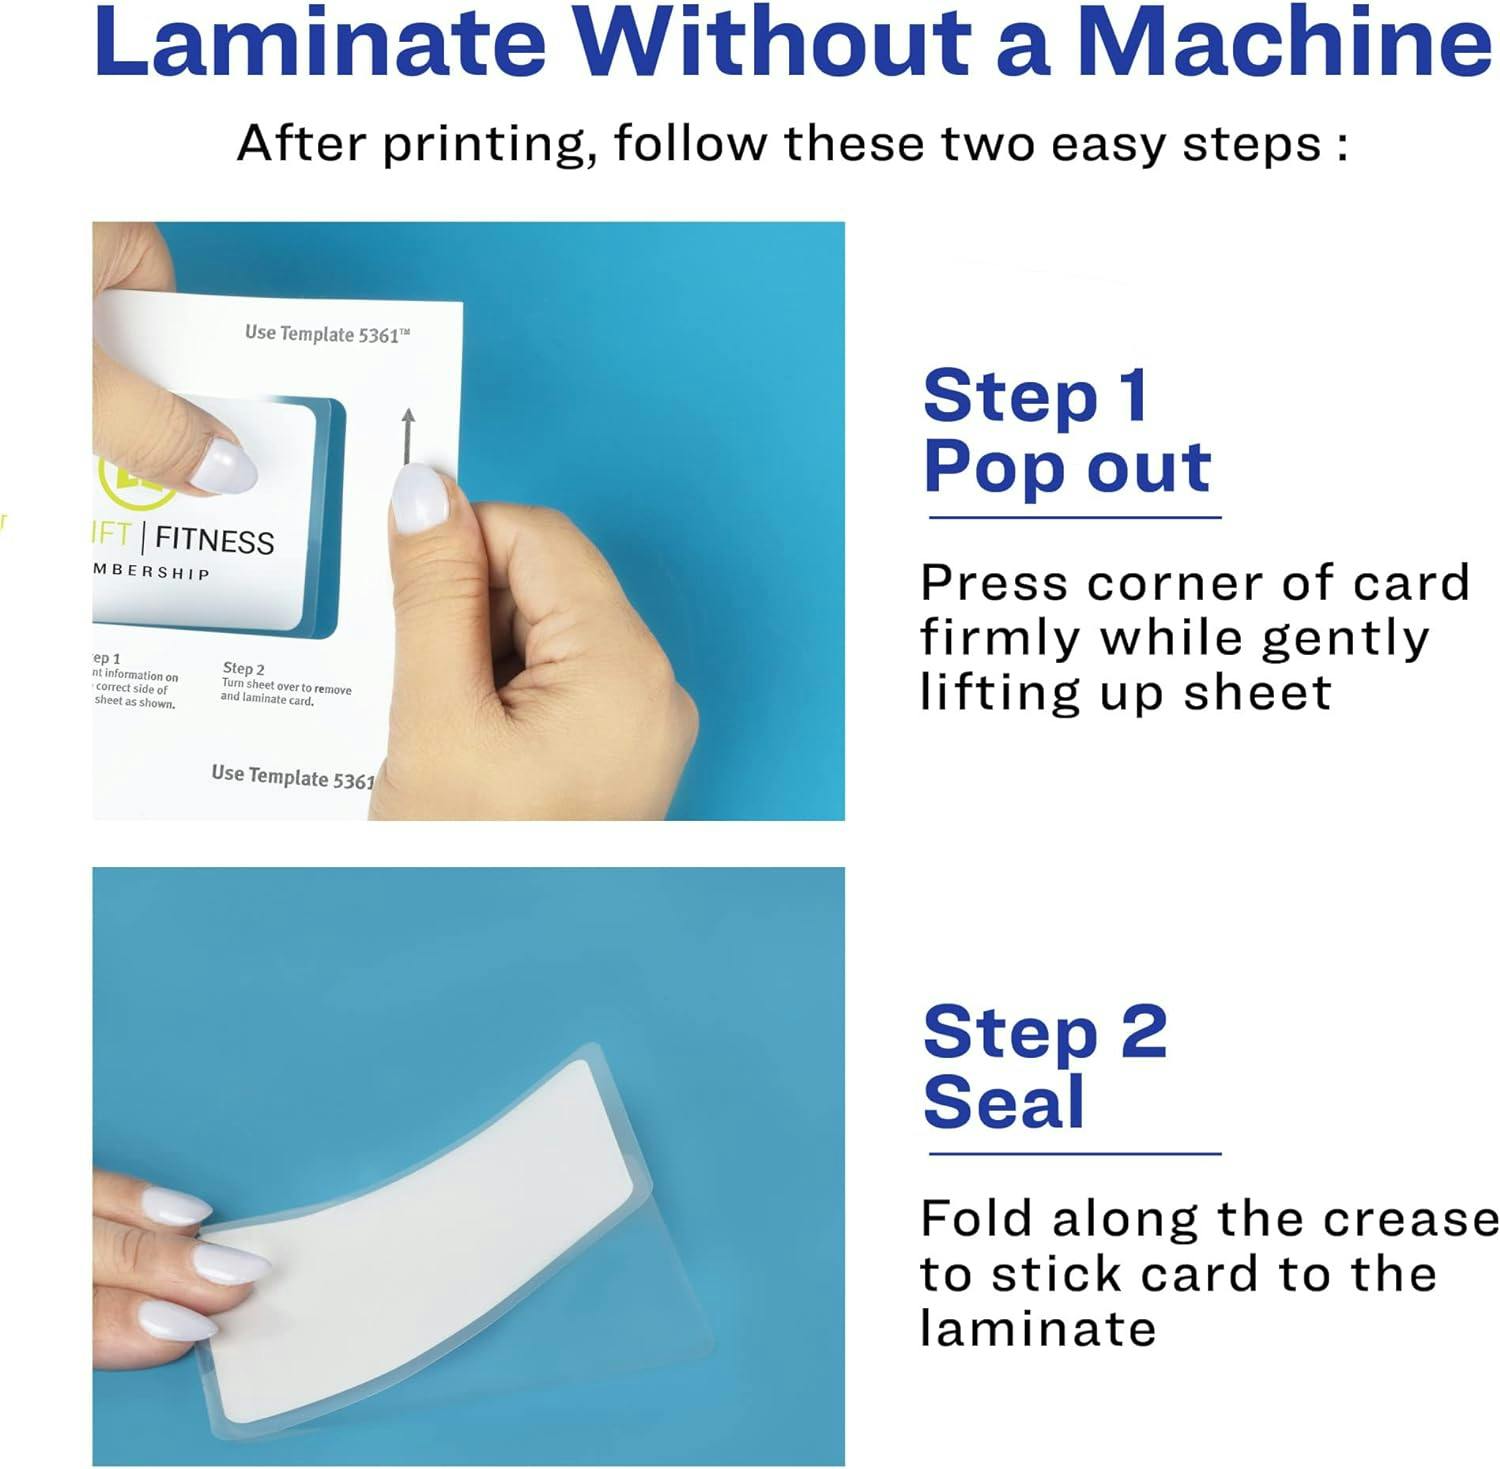 Elegant White Self-Laminating Printable ID Badge Set - 30 Cards